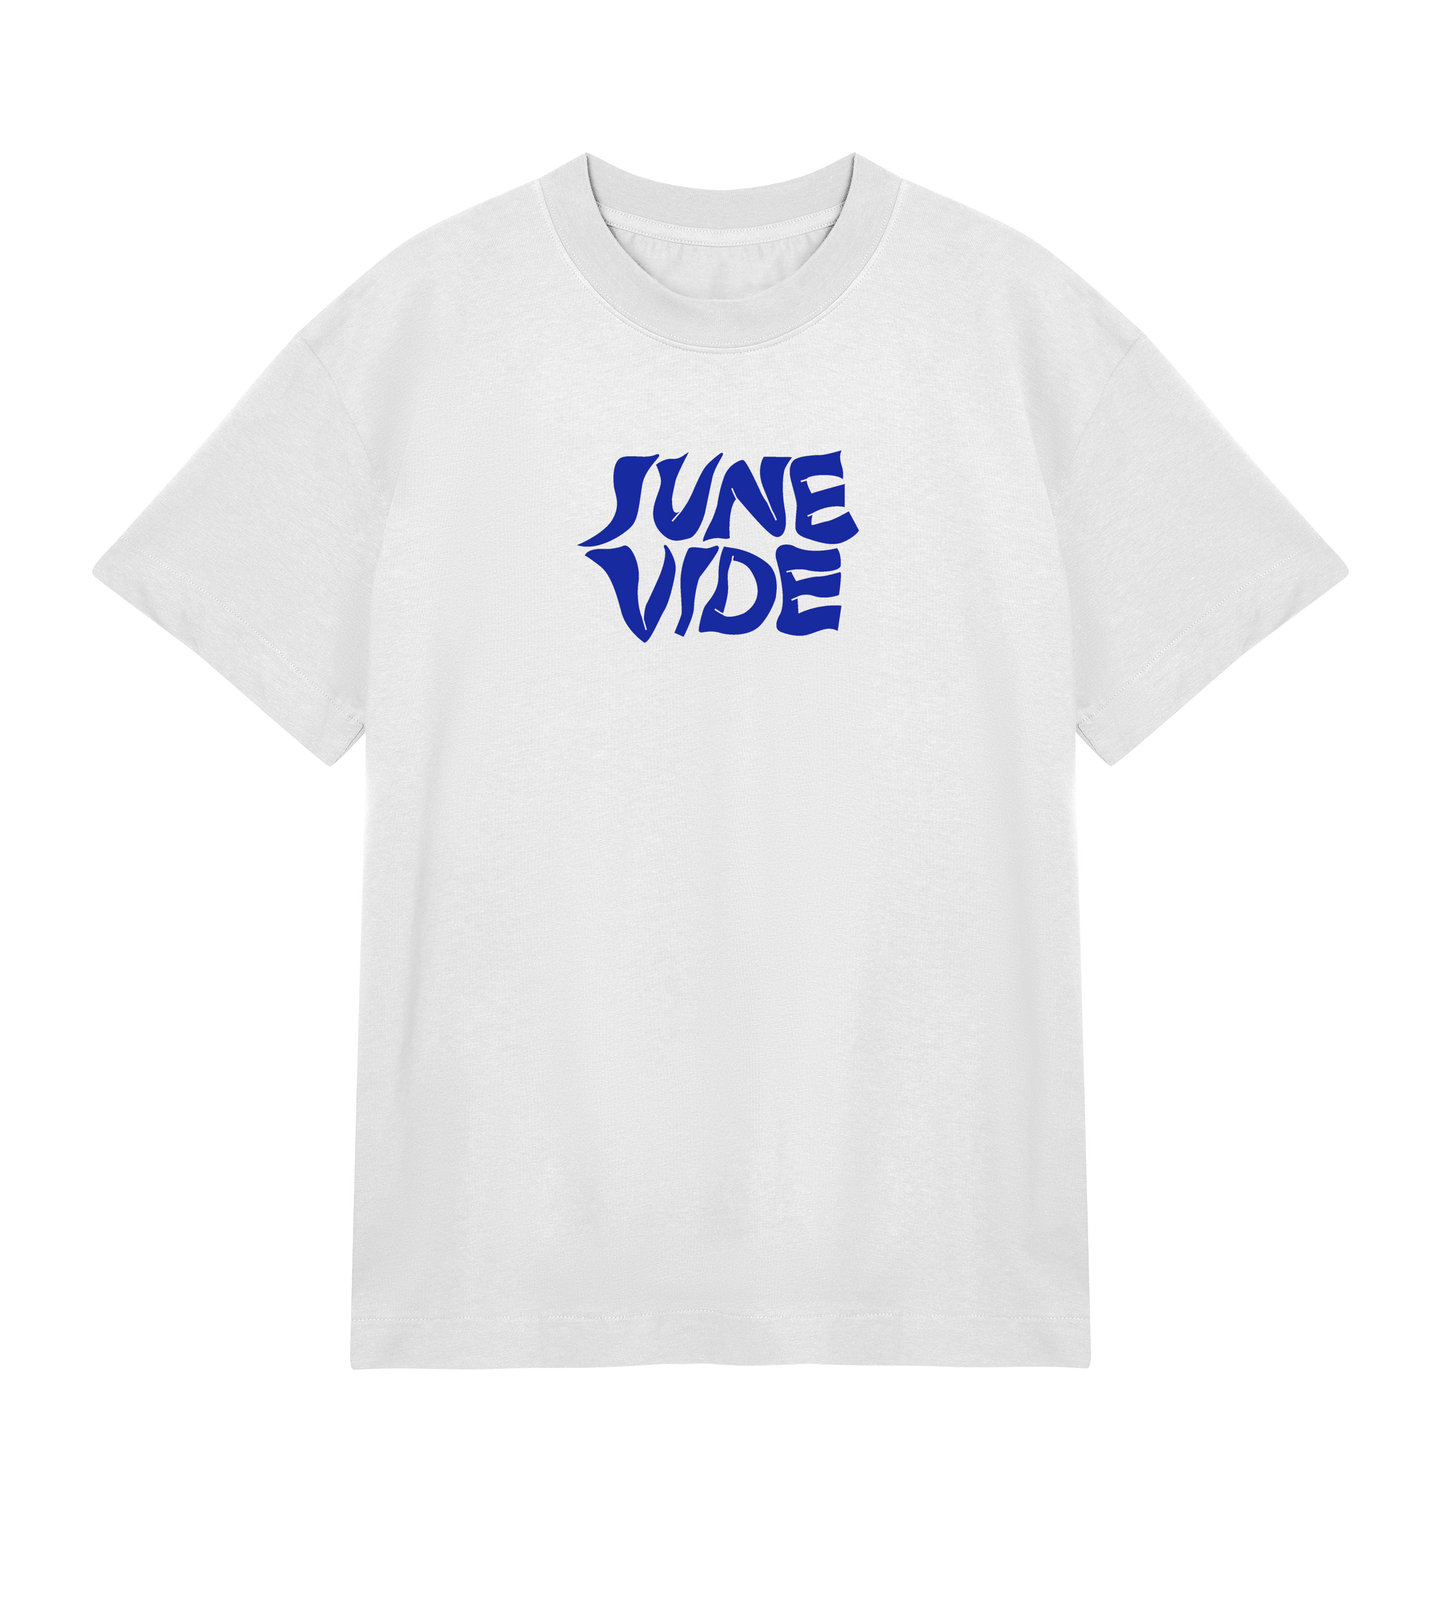 June Vide: Blue logo